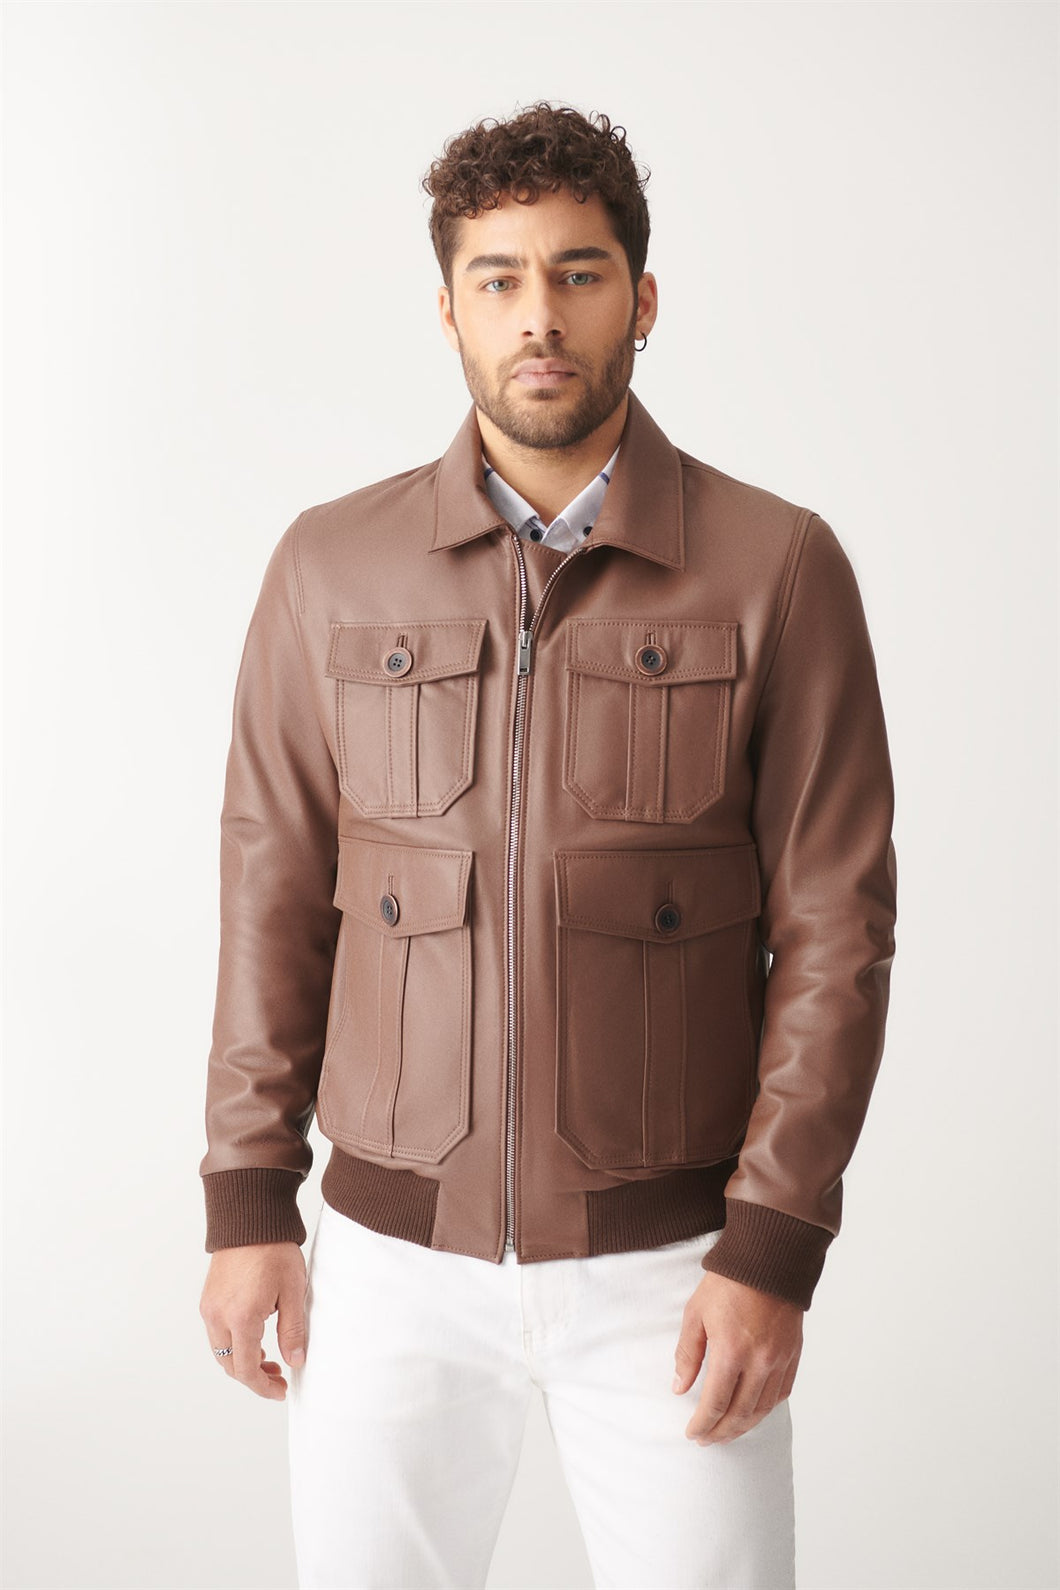 Classic Brown Bomber Leather Jacket for Men - Boneshia